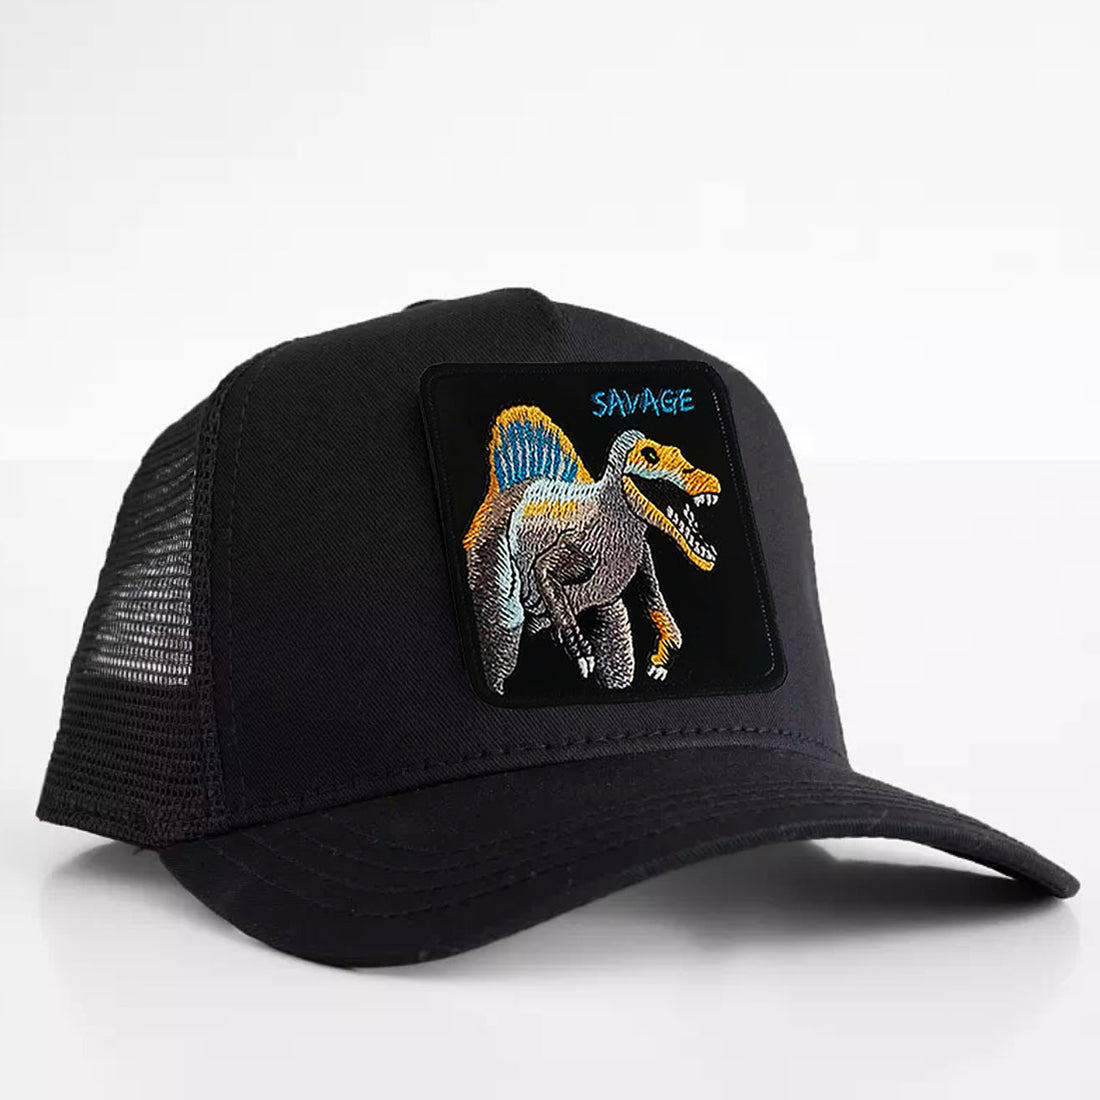 Spinosaurus - "Savage" Trucker Hat